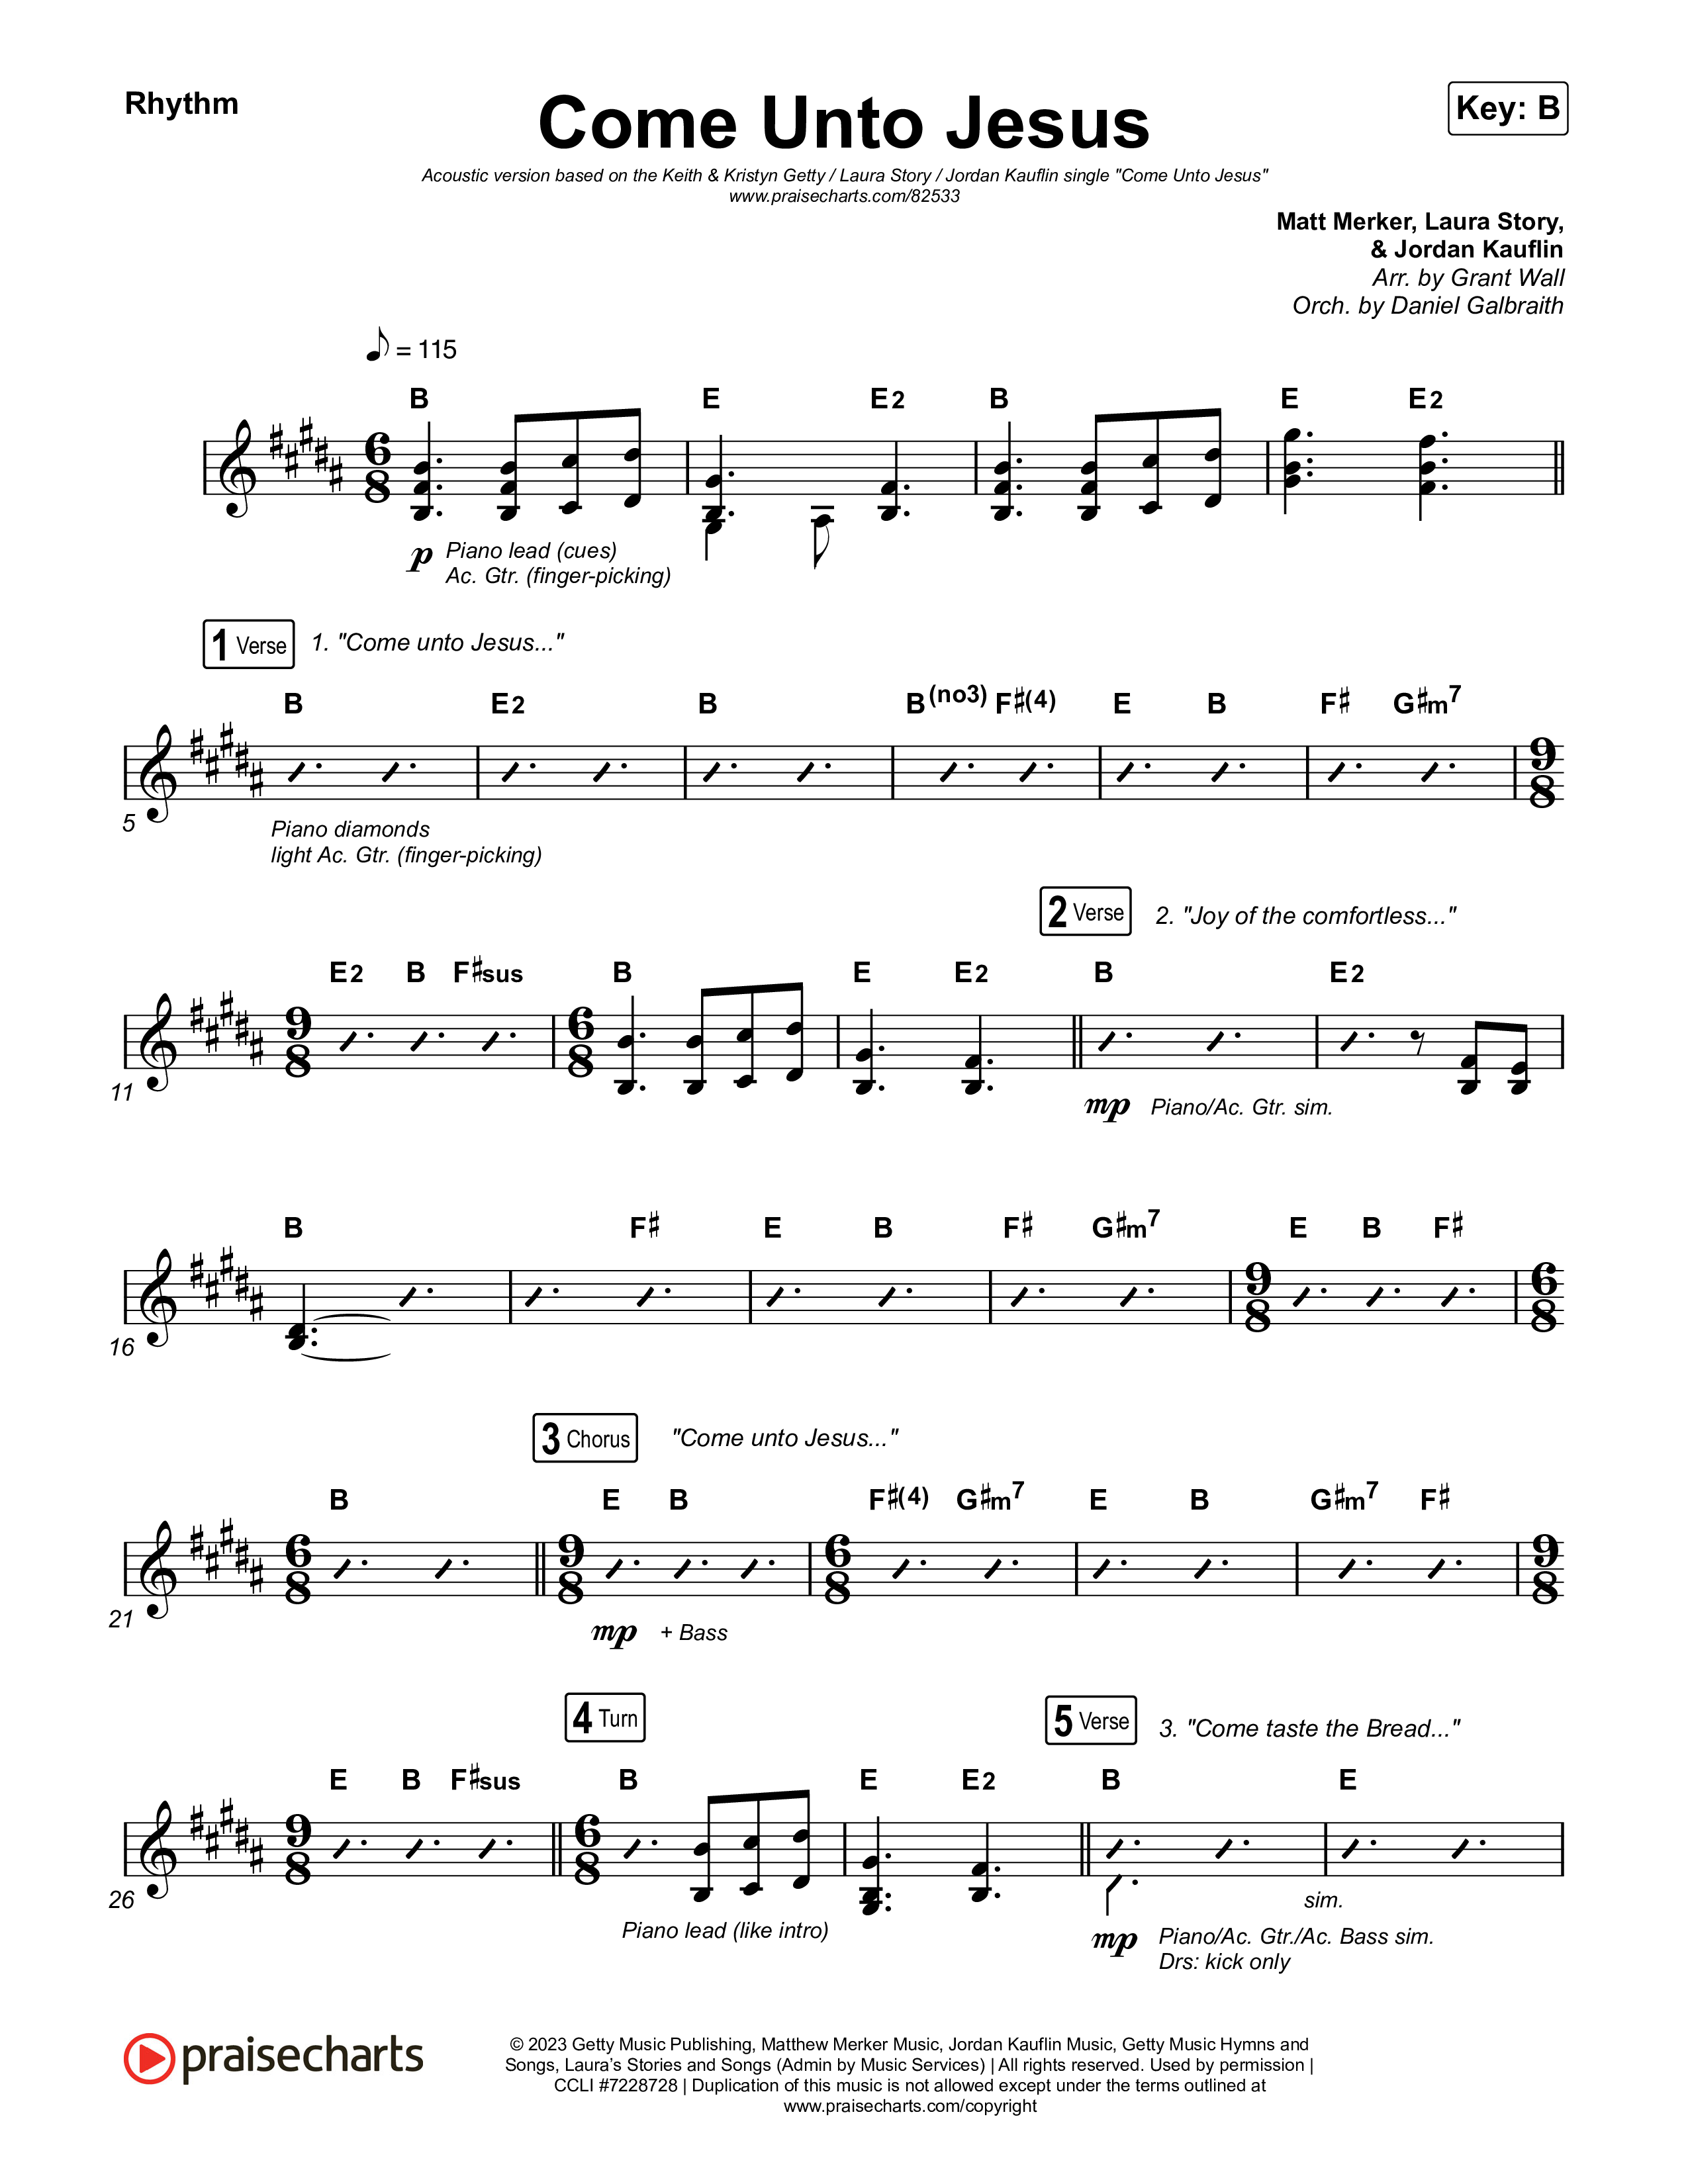 Come Unto Jesus (Acoustic) Rhythm Chart (Keith & Kristyn Getty / Laura Story / Jordan Kauflin)